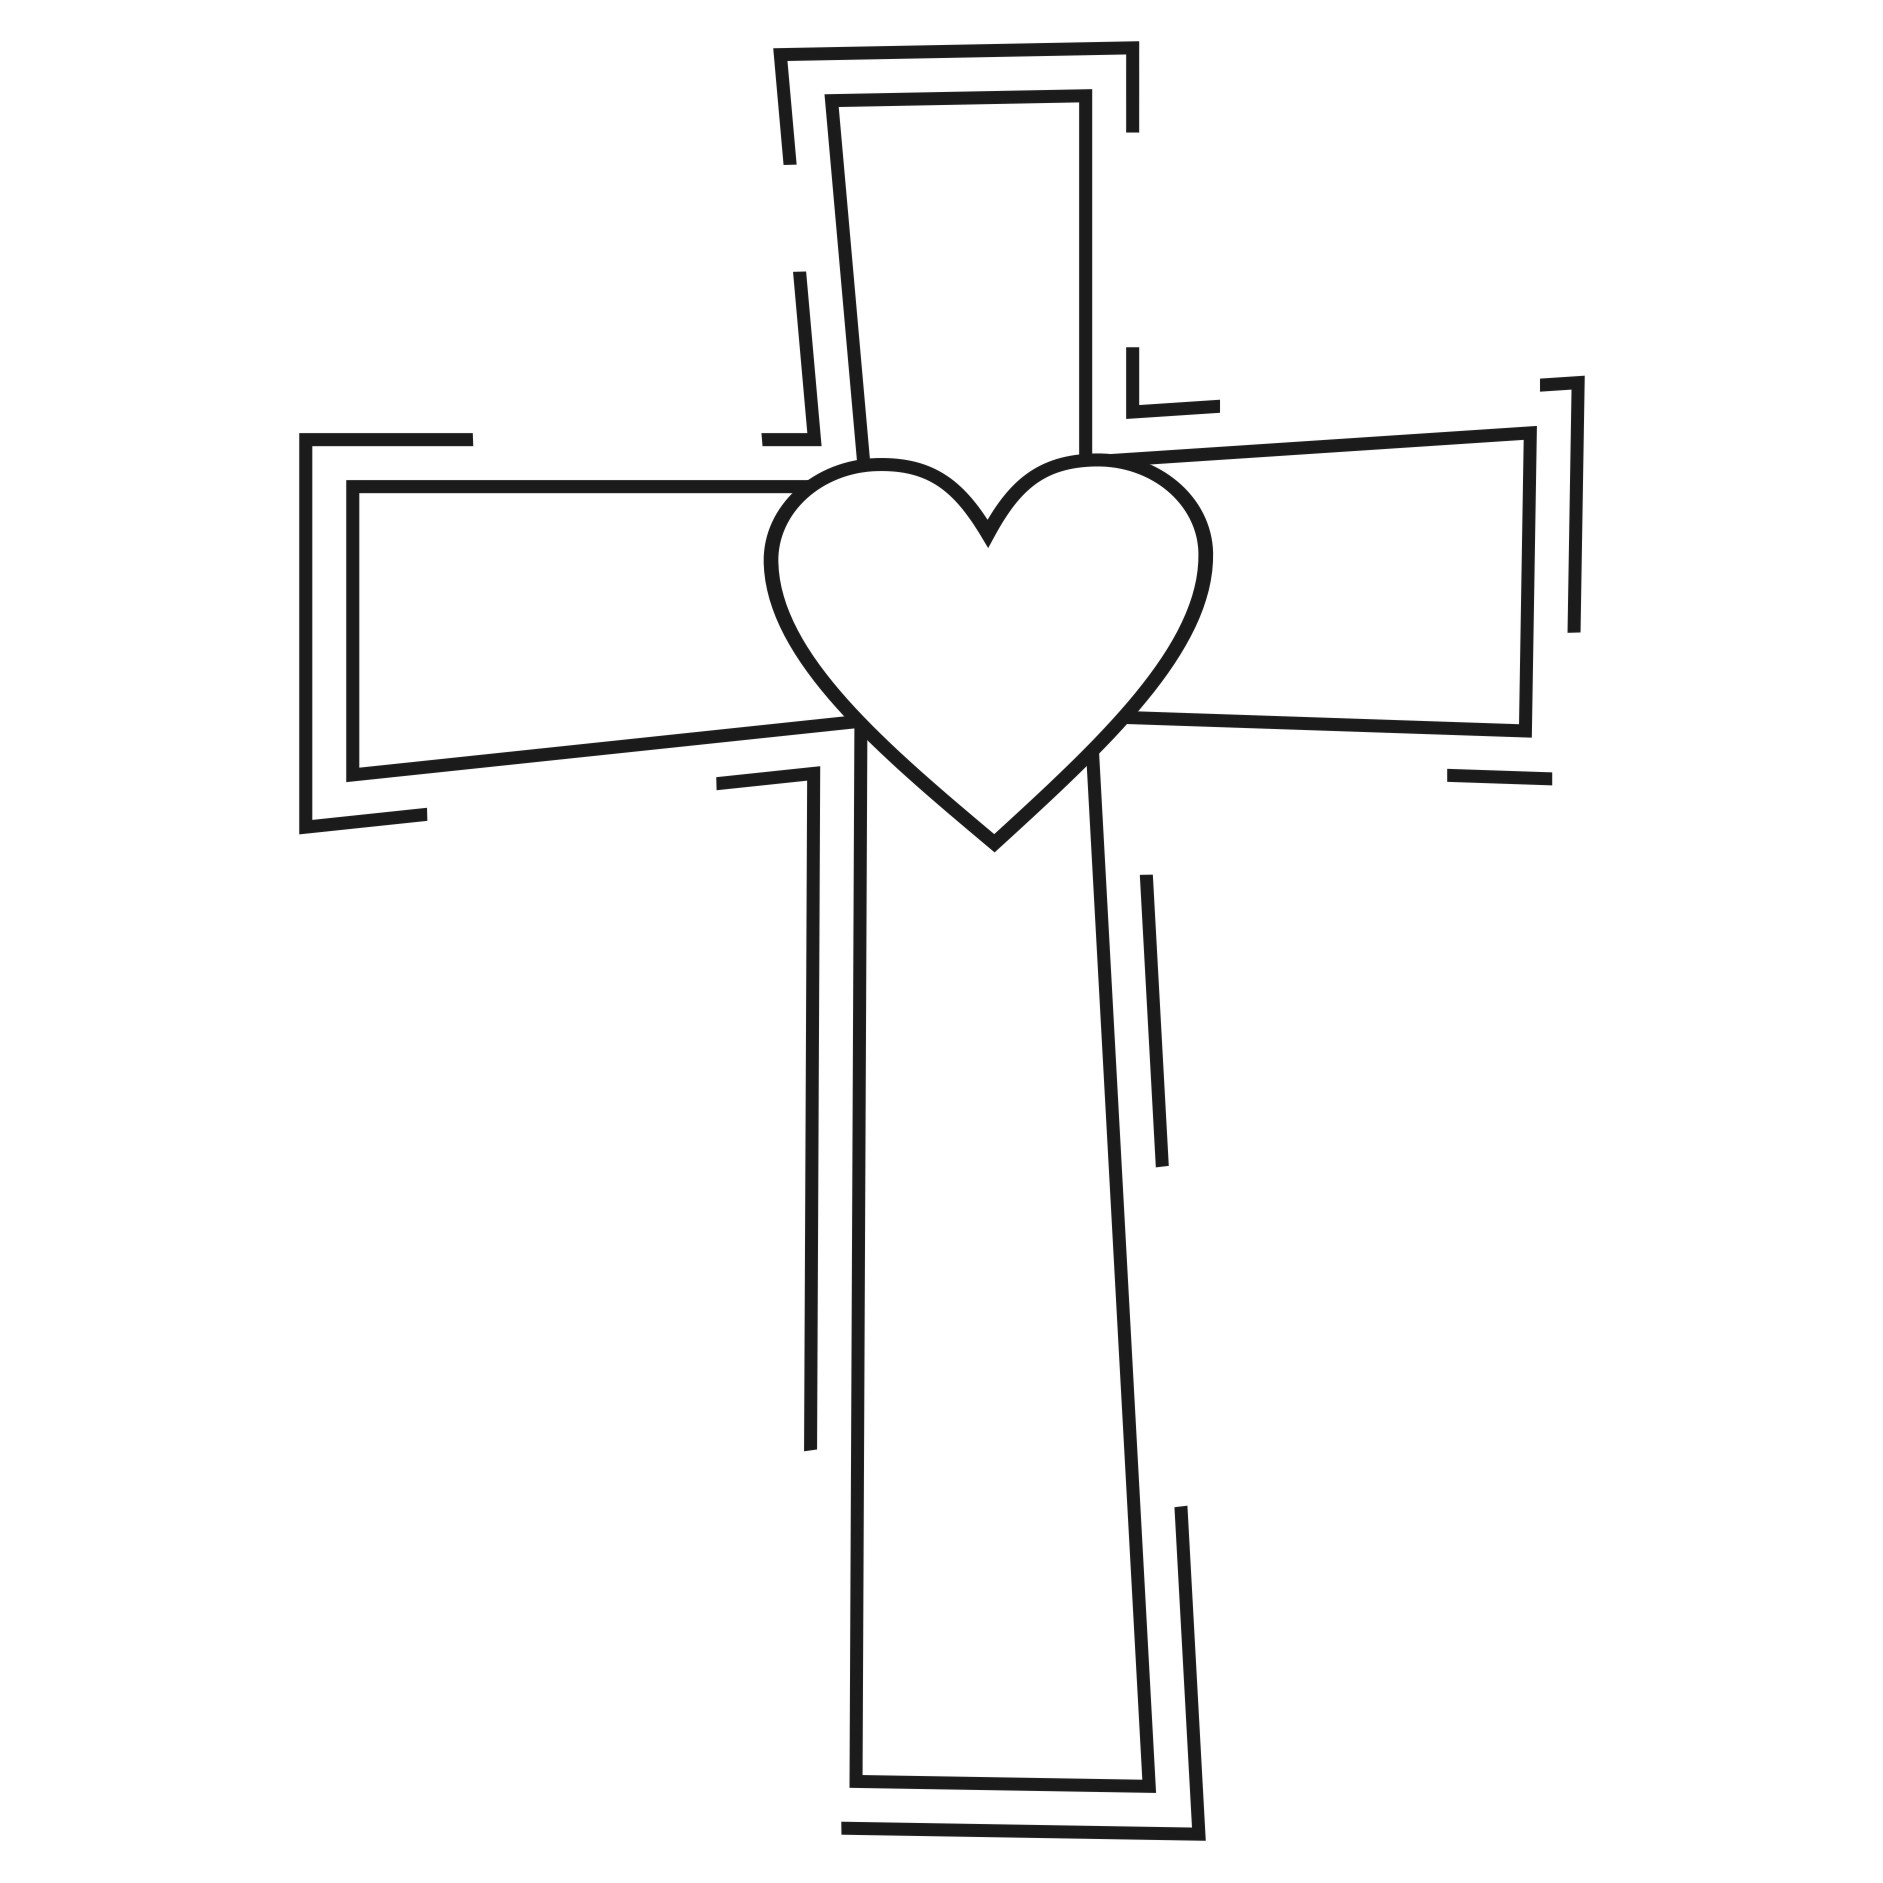 Clipart & Design Ideas: Clipart » Religious » heart cross